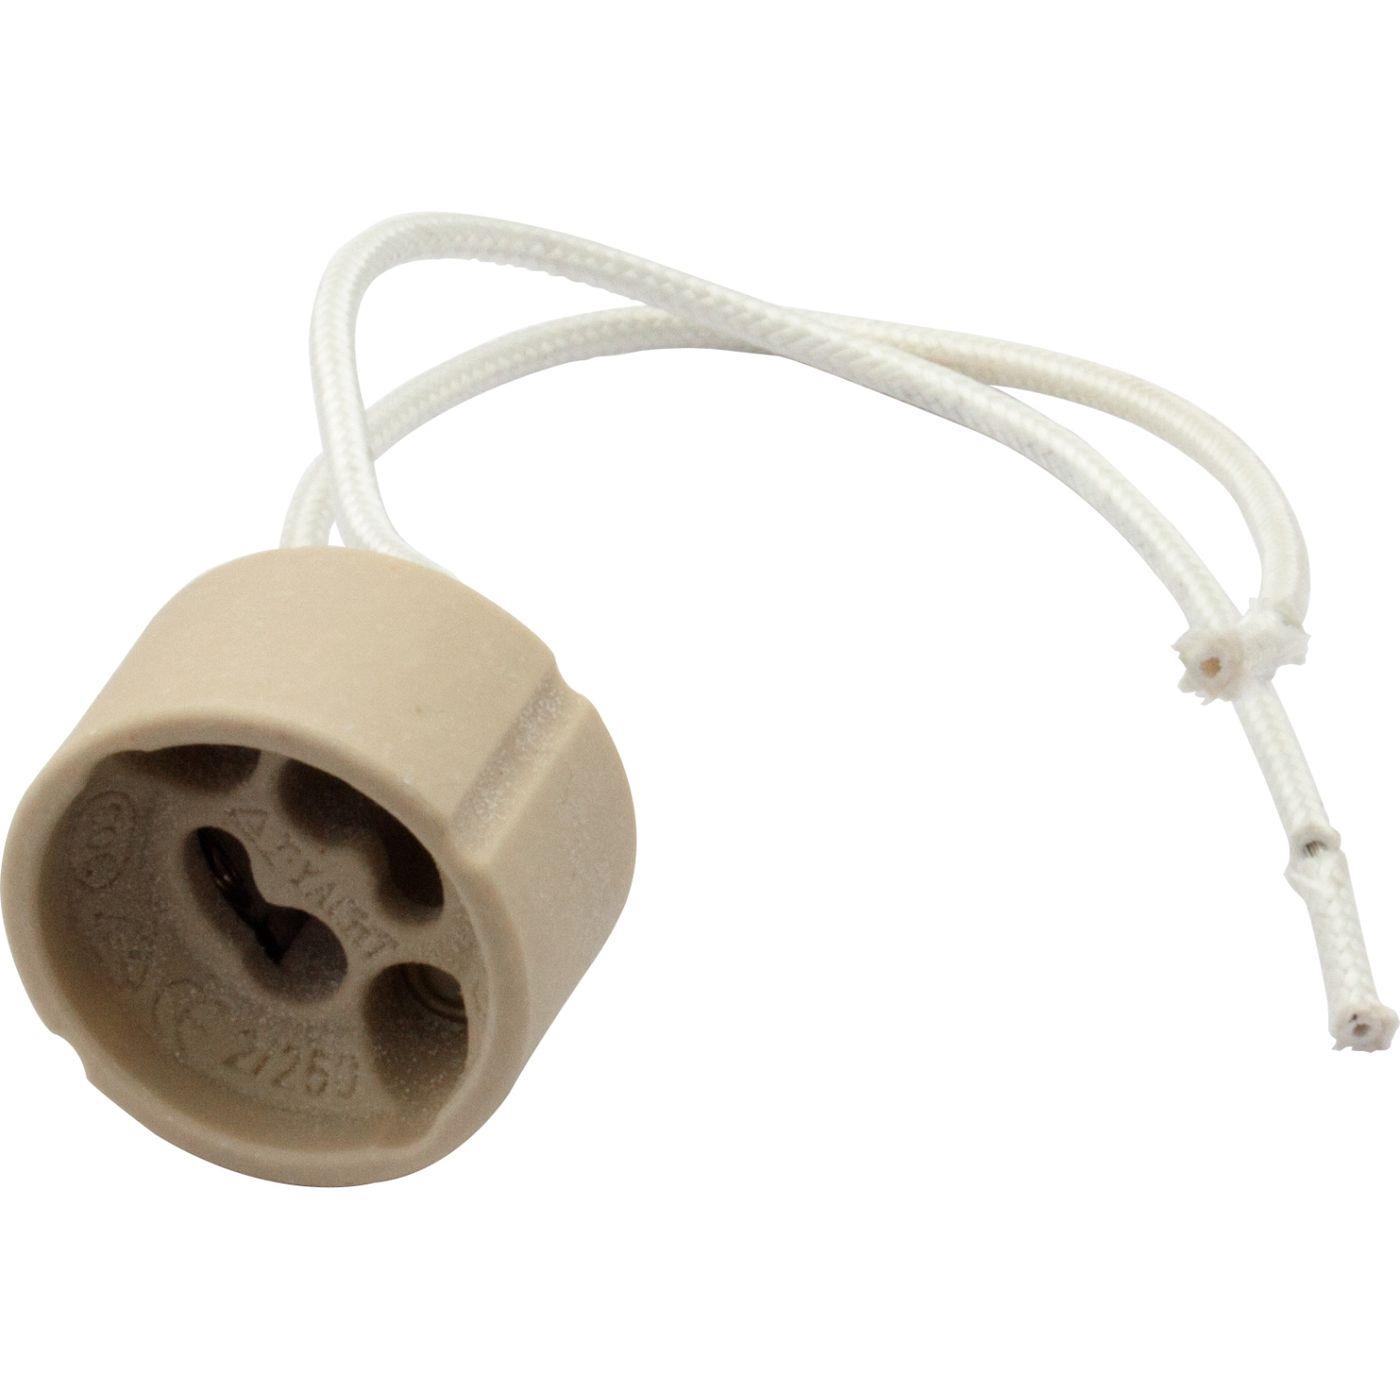 GU10 Illuminant Socket Ceramic + 14,5cm Cable for Lamps 230V